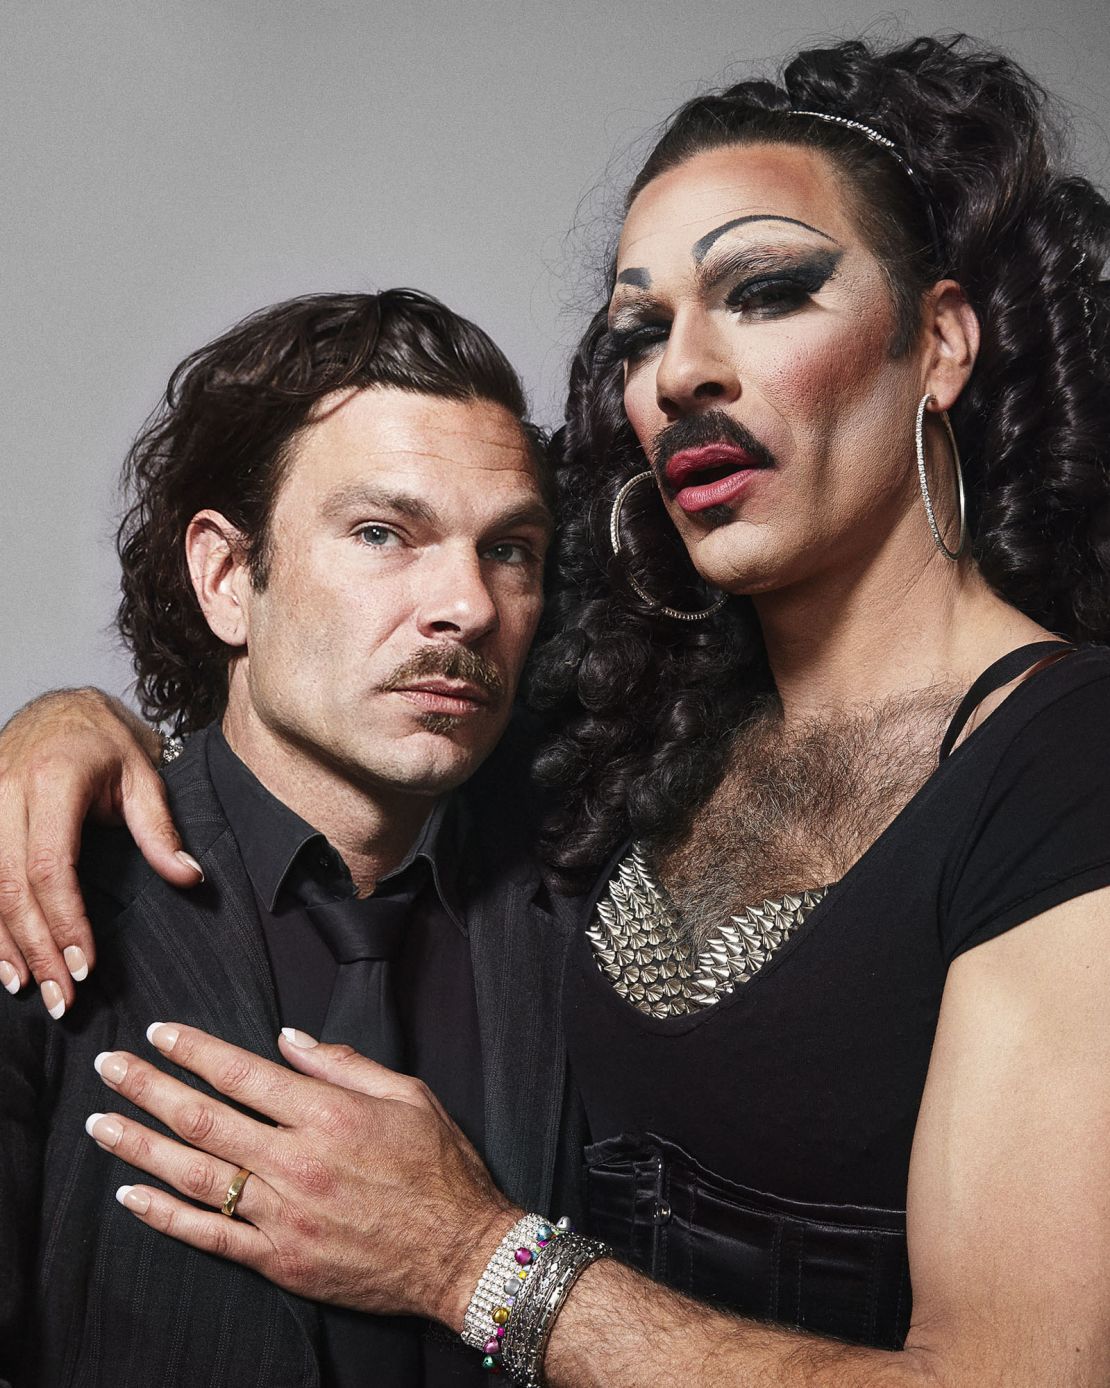 Micha Schneiderberg with his drag queen alter ego, Snorella.